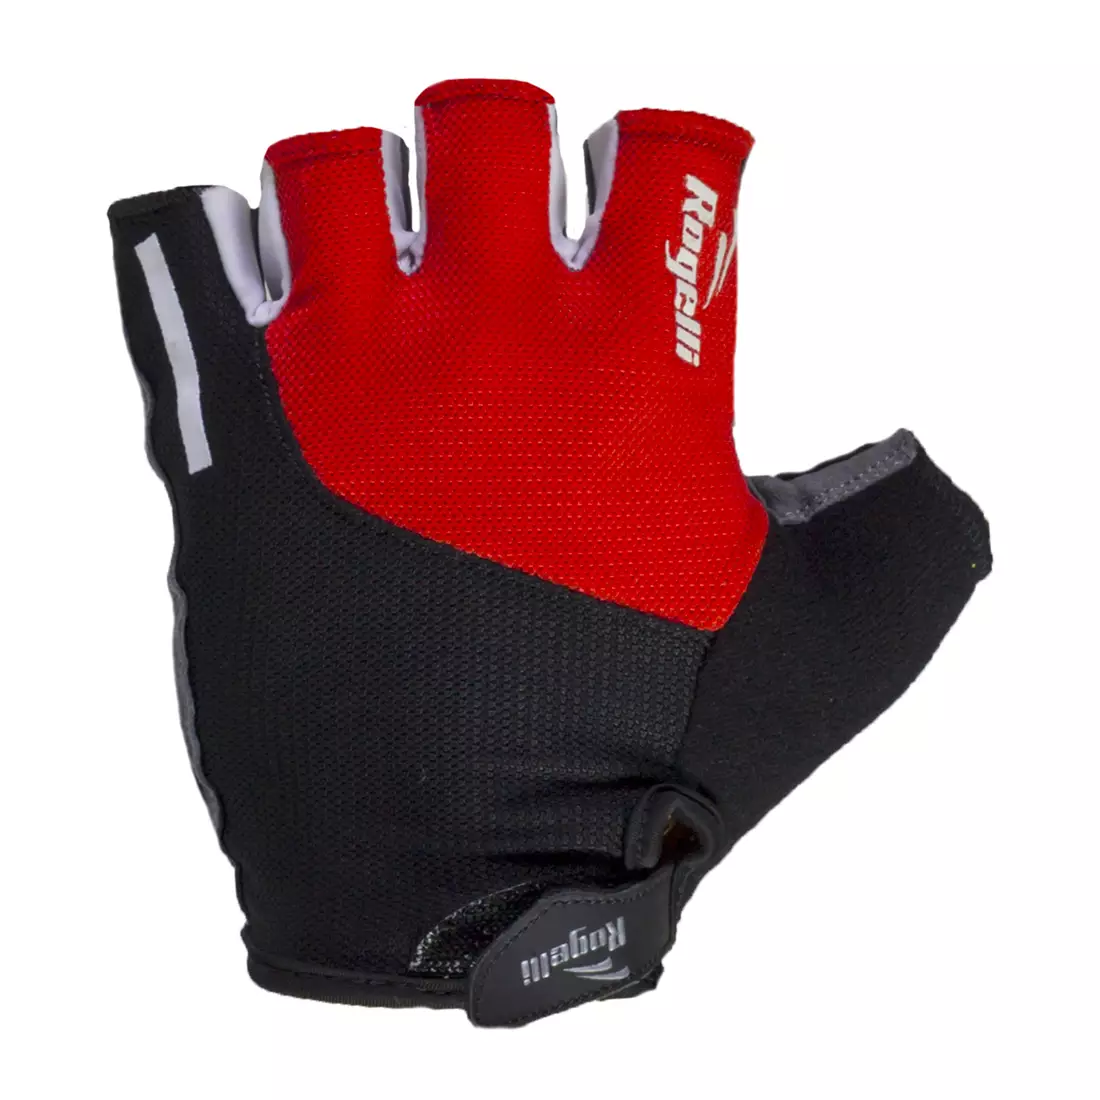 ROGELLI BIKE ROCKFORD men's cycling gloves 006.340, red